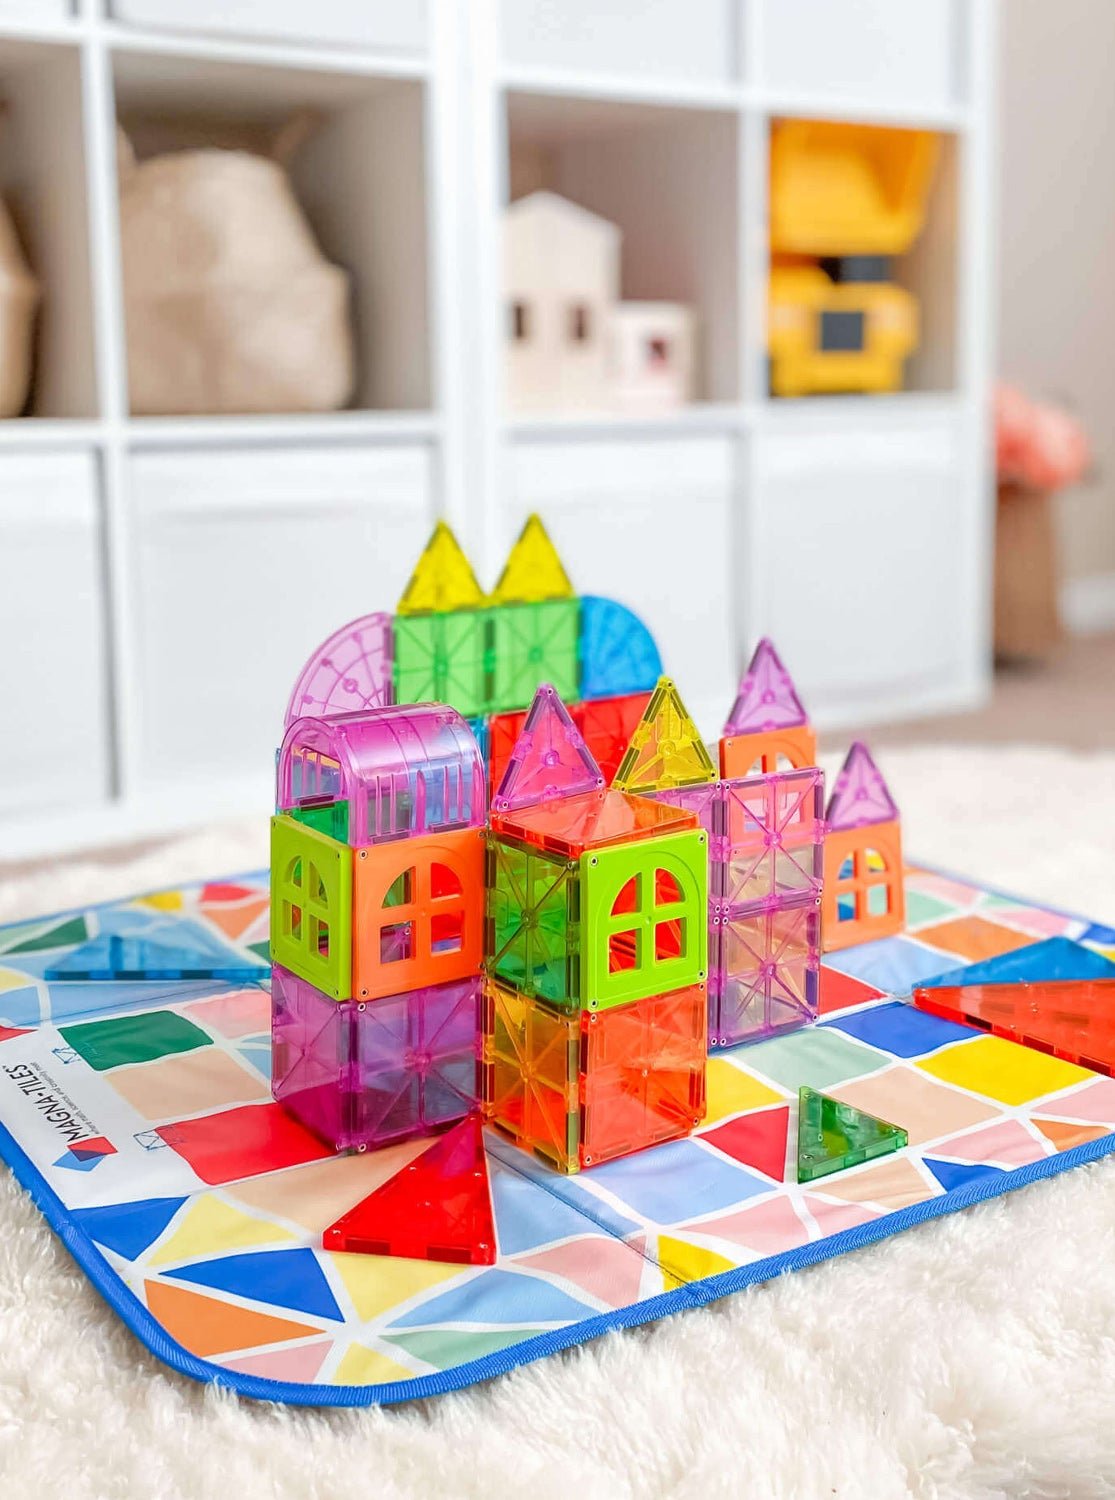 Magna-Tiles Storage Bin & Interactive Play-Mat - ANB Baby -building blocks